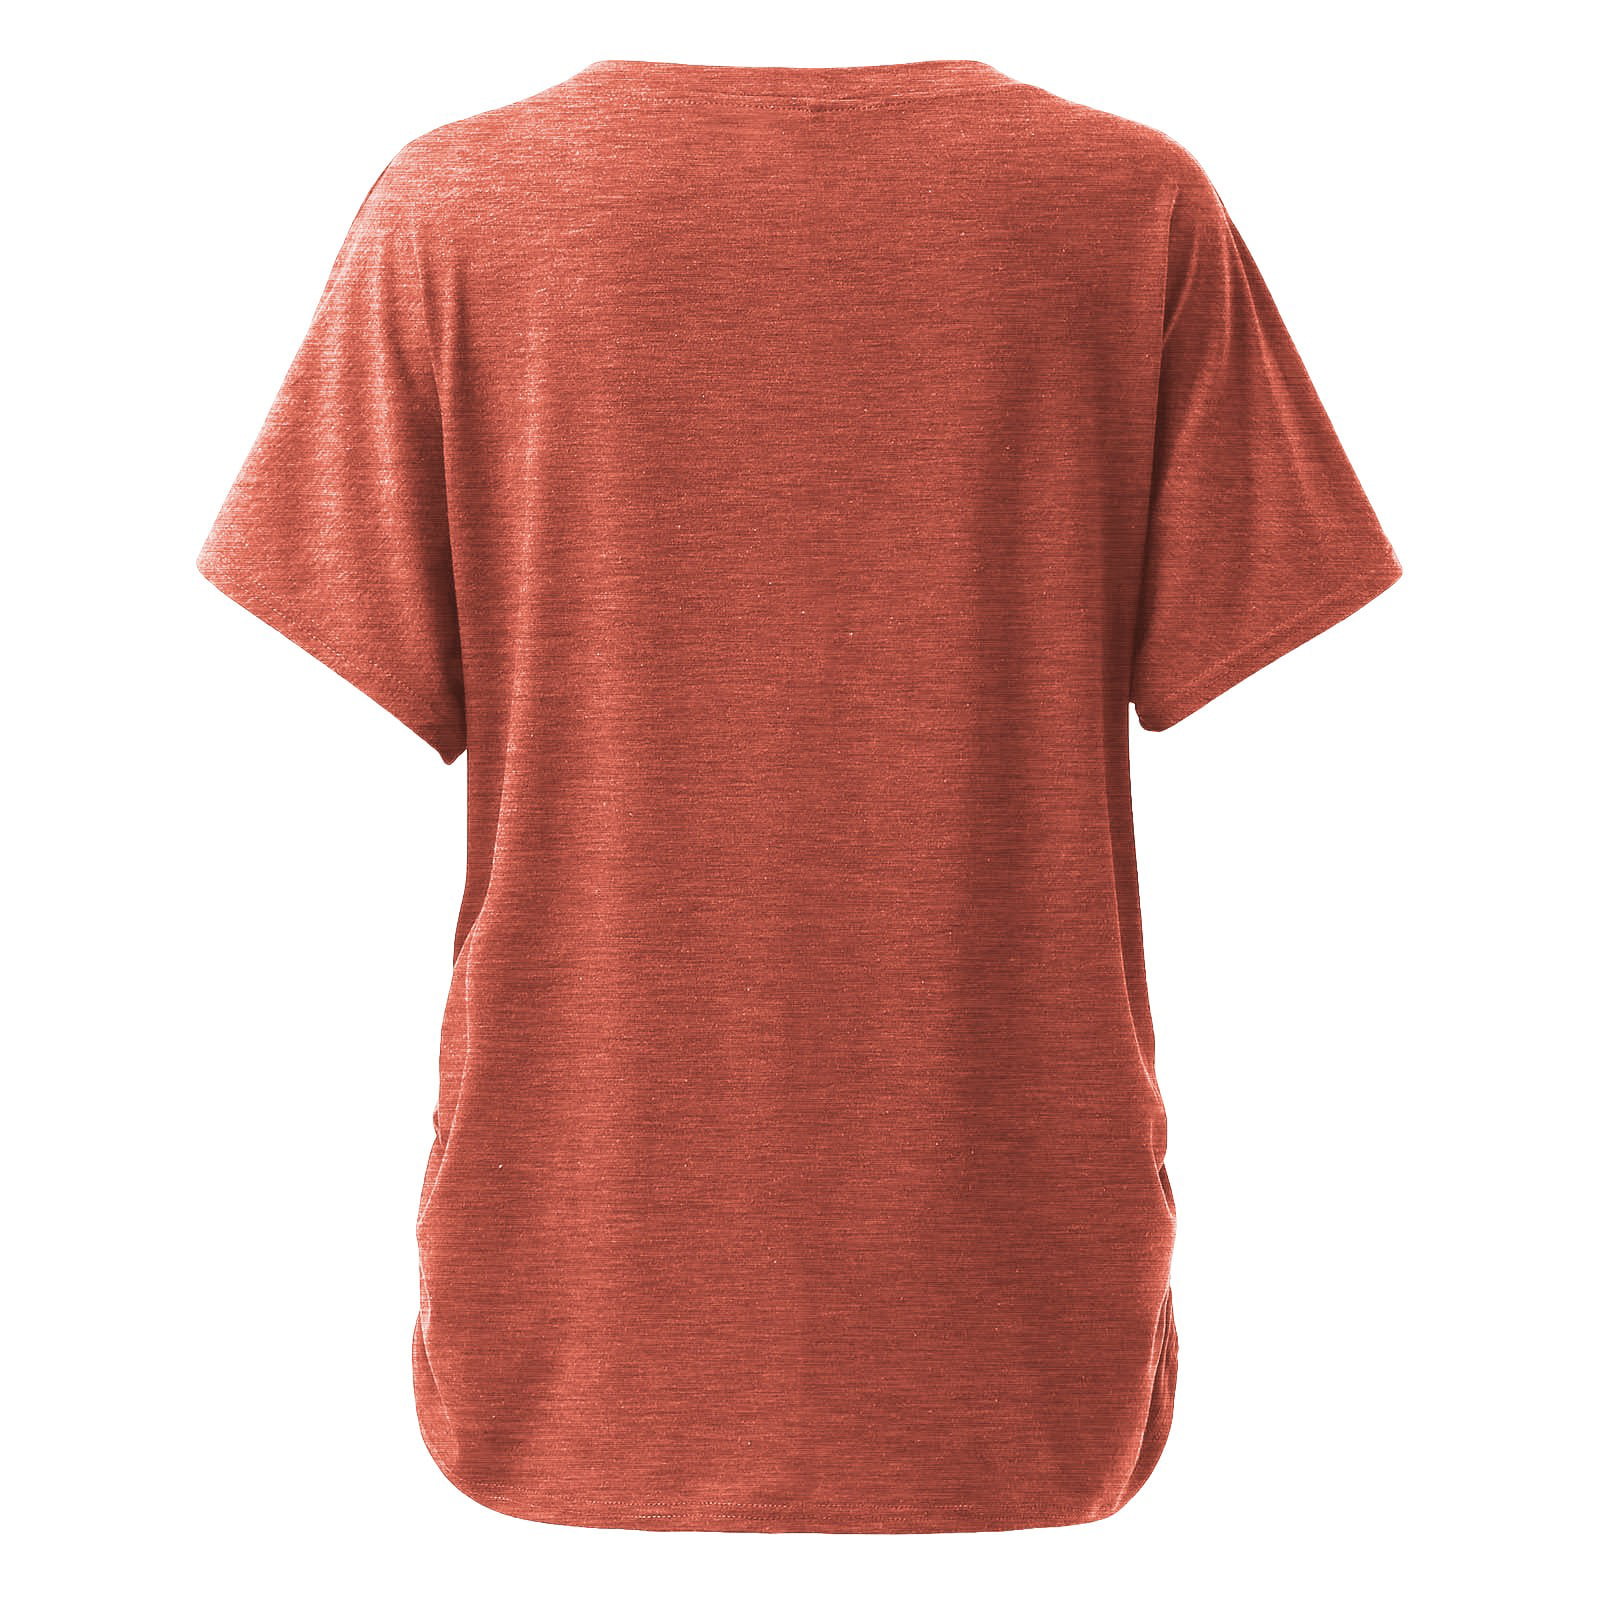 Lands End Womens T Shirt Top Shaped Fit V Neck Short Sleeve Orange Size XS